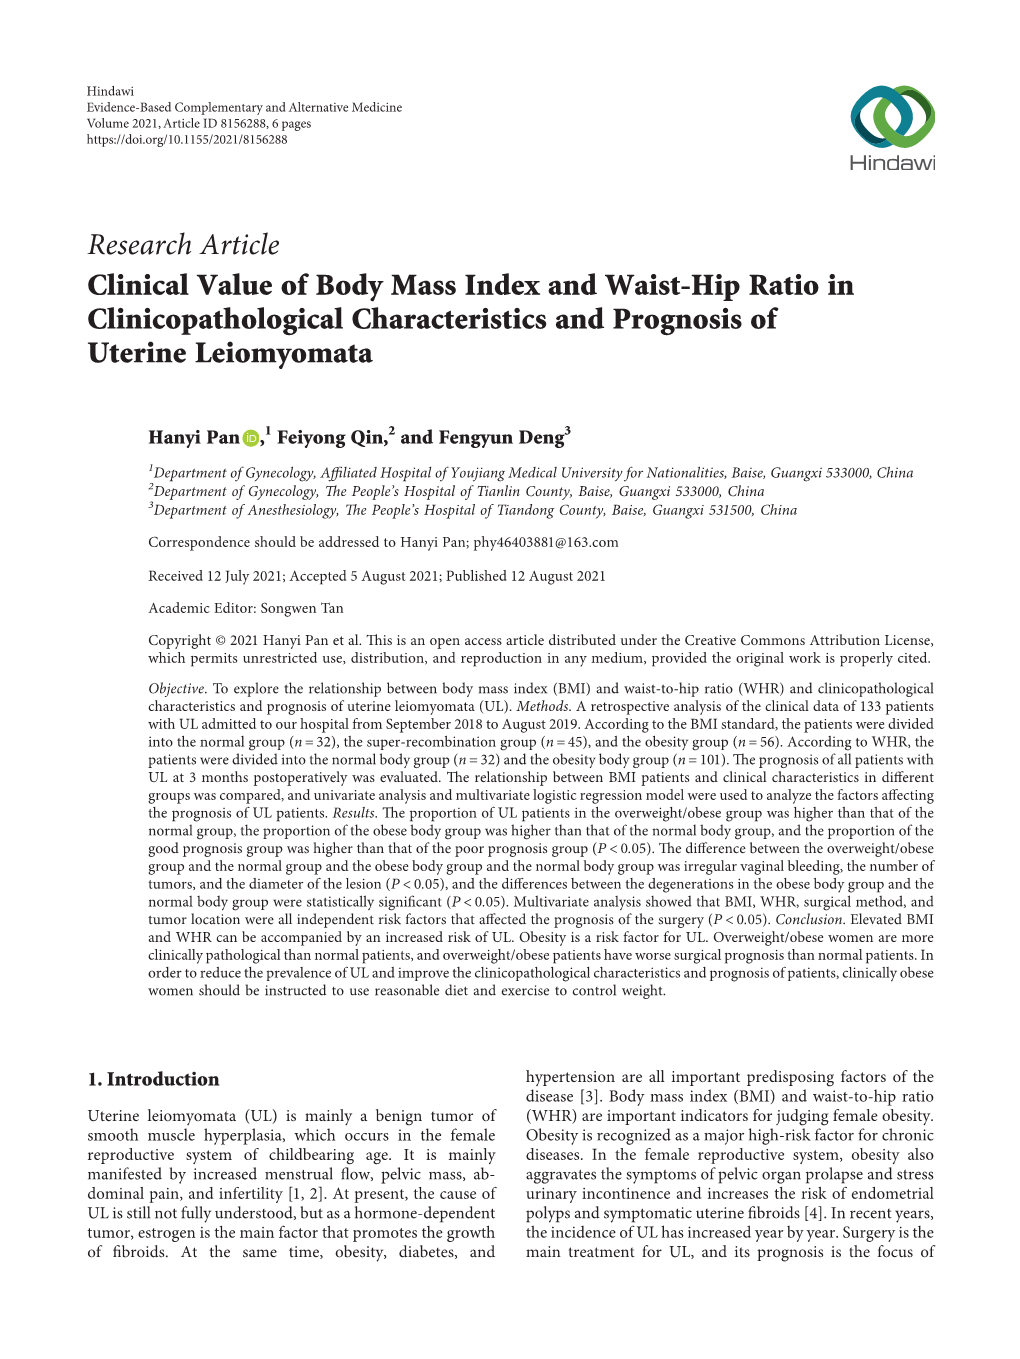 Clinical Value of Body Mass Index and Waist-Hip Ratio in Clinicopathological Characteristics and Prognosis of Uterine Leiomyomata